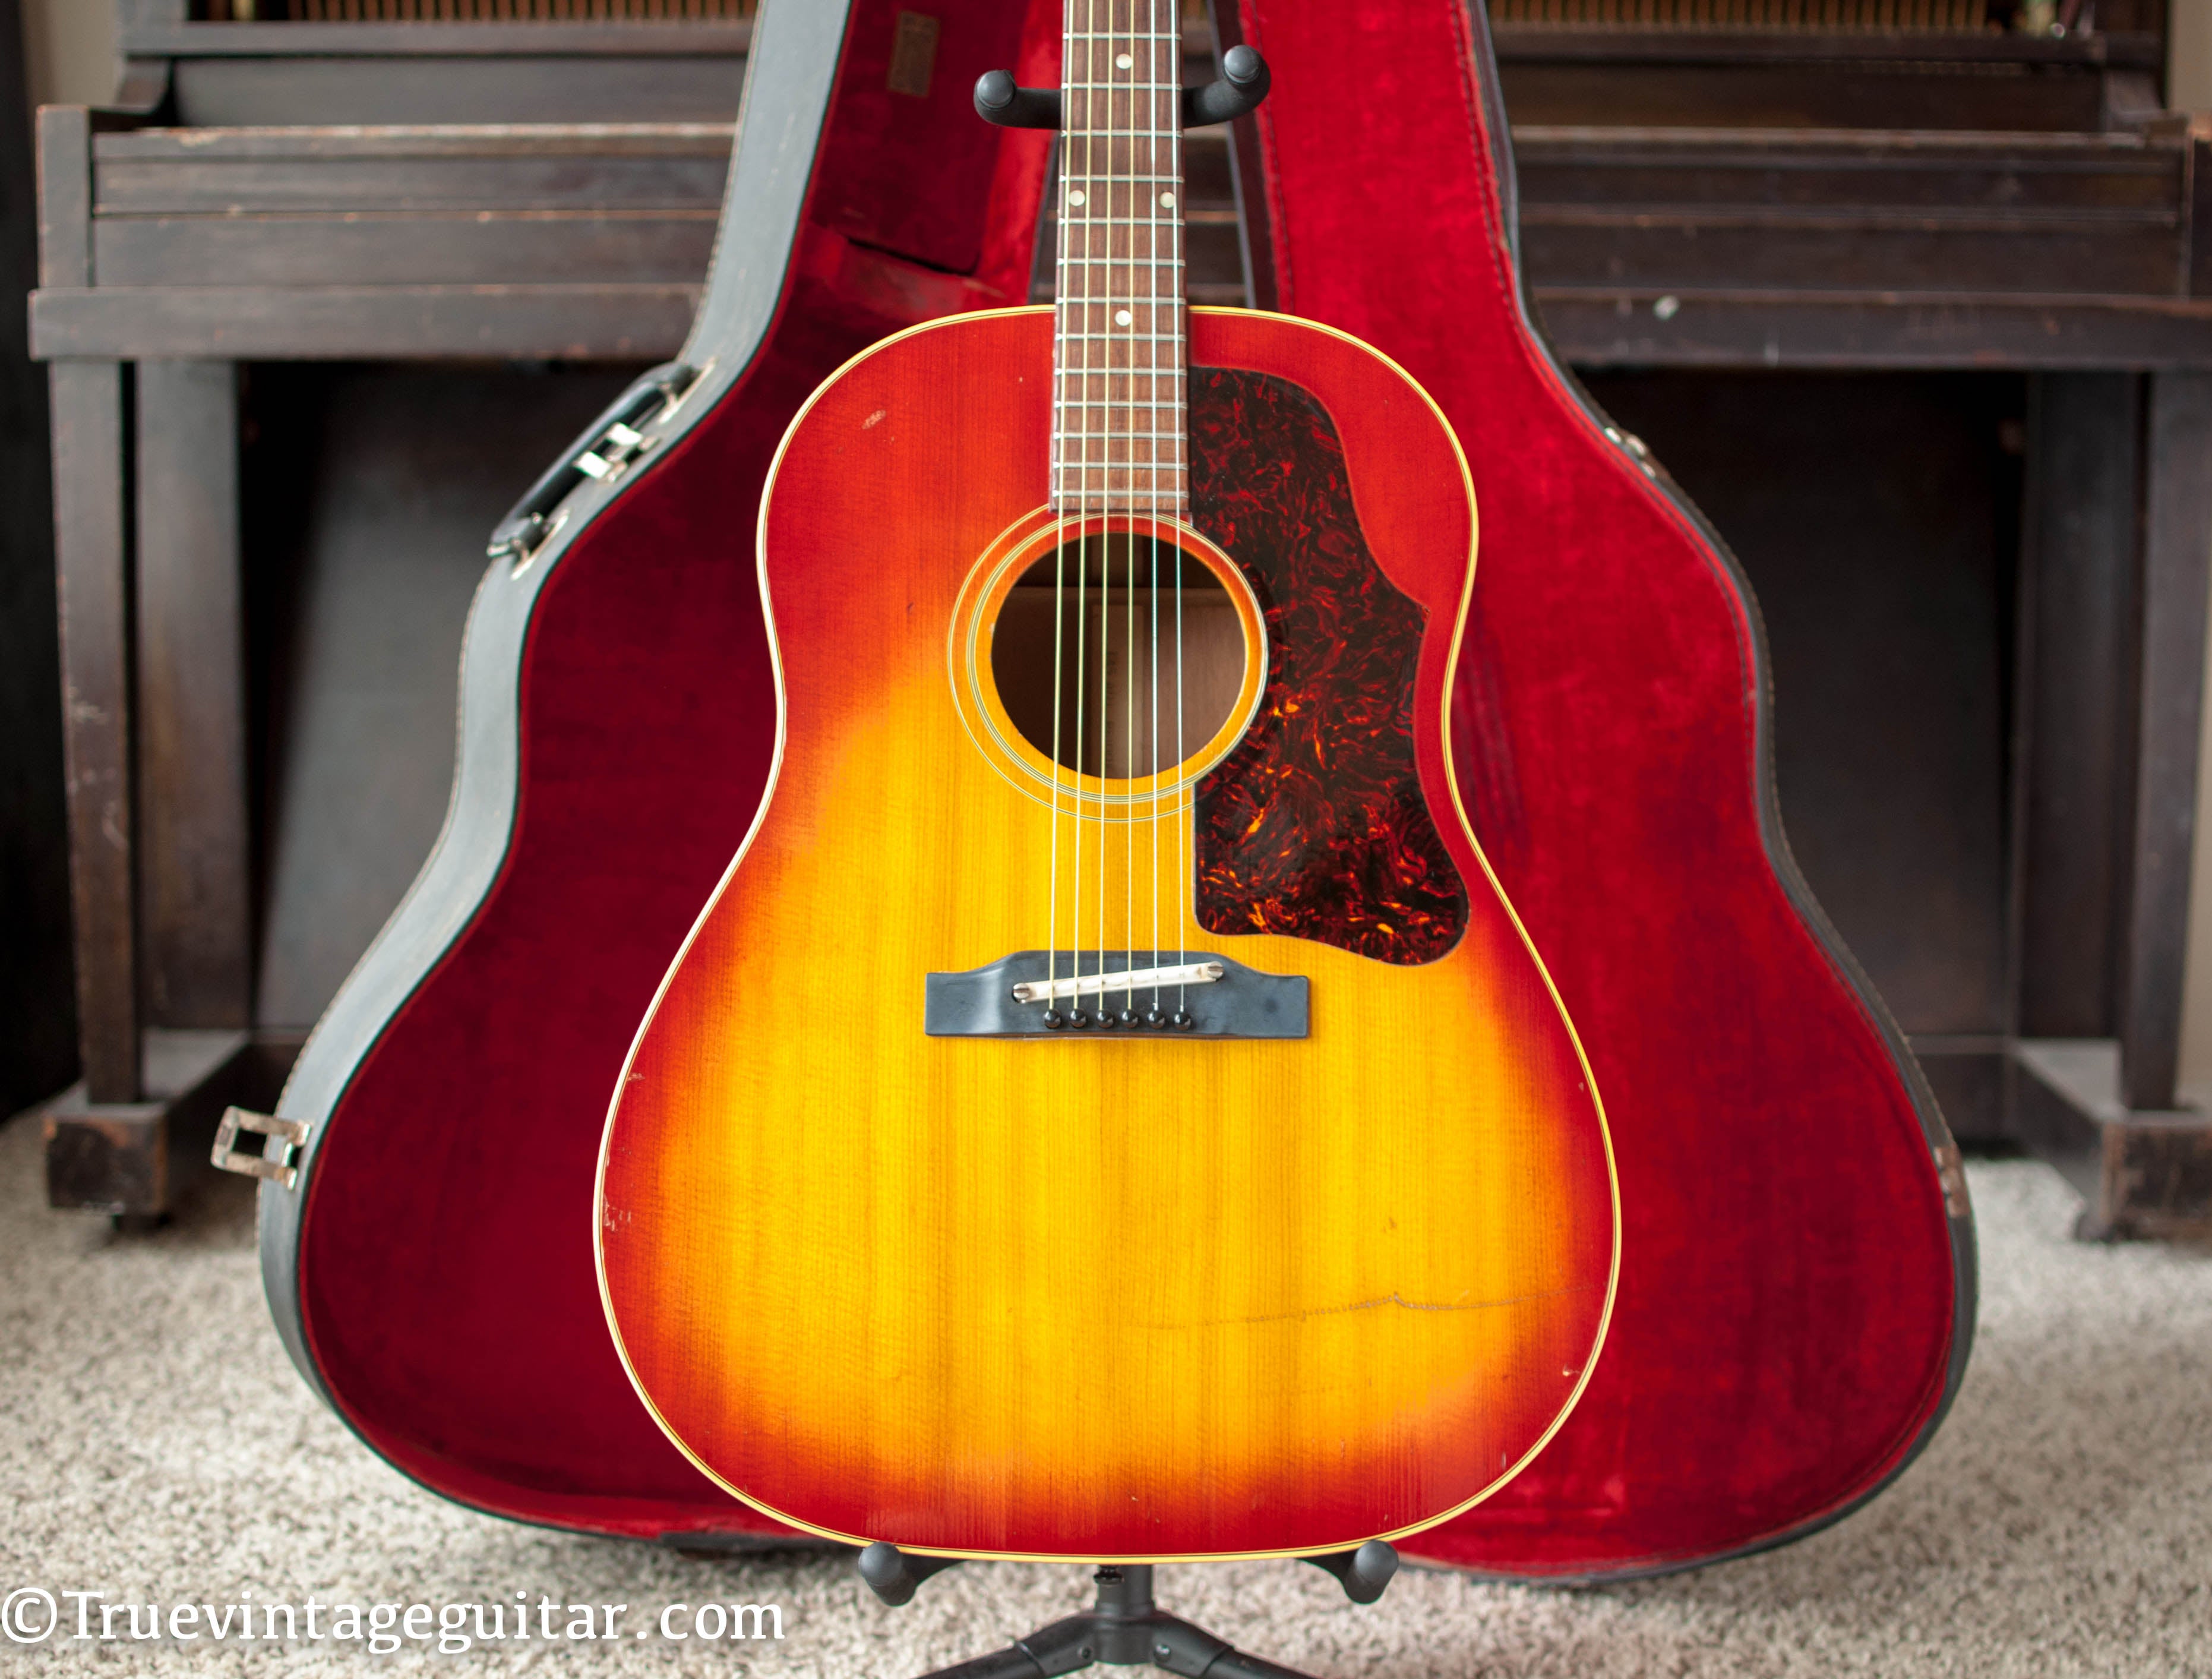 Vintage 1963 Gibson J-45 acoustic guitar